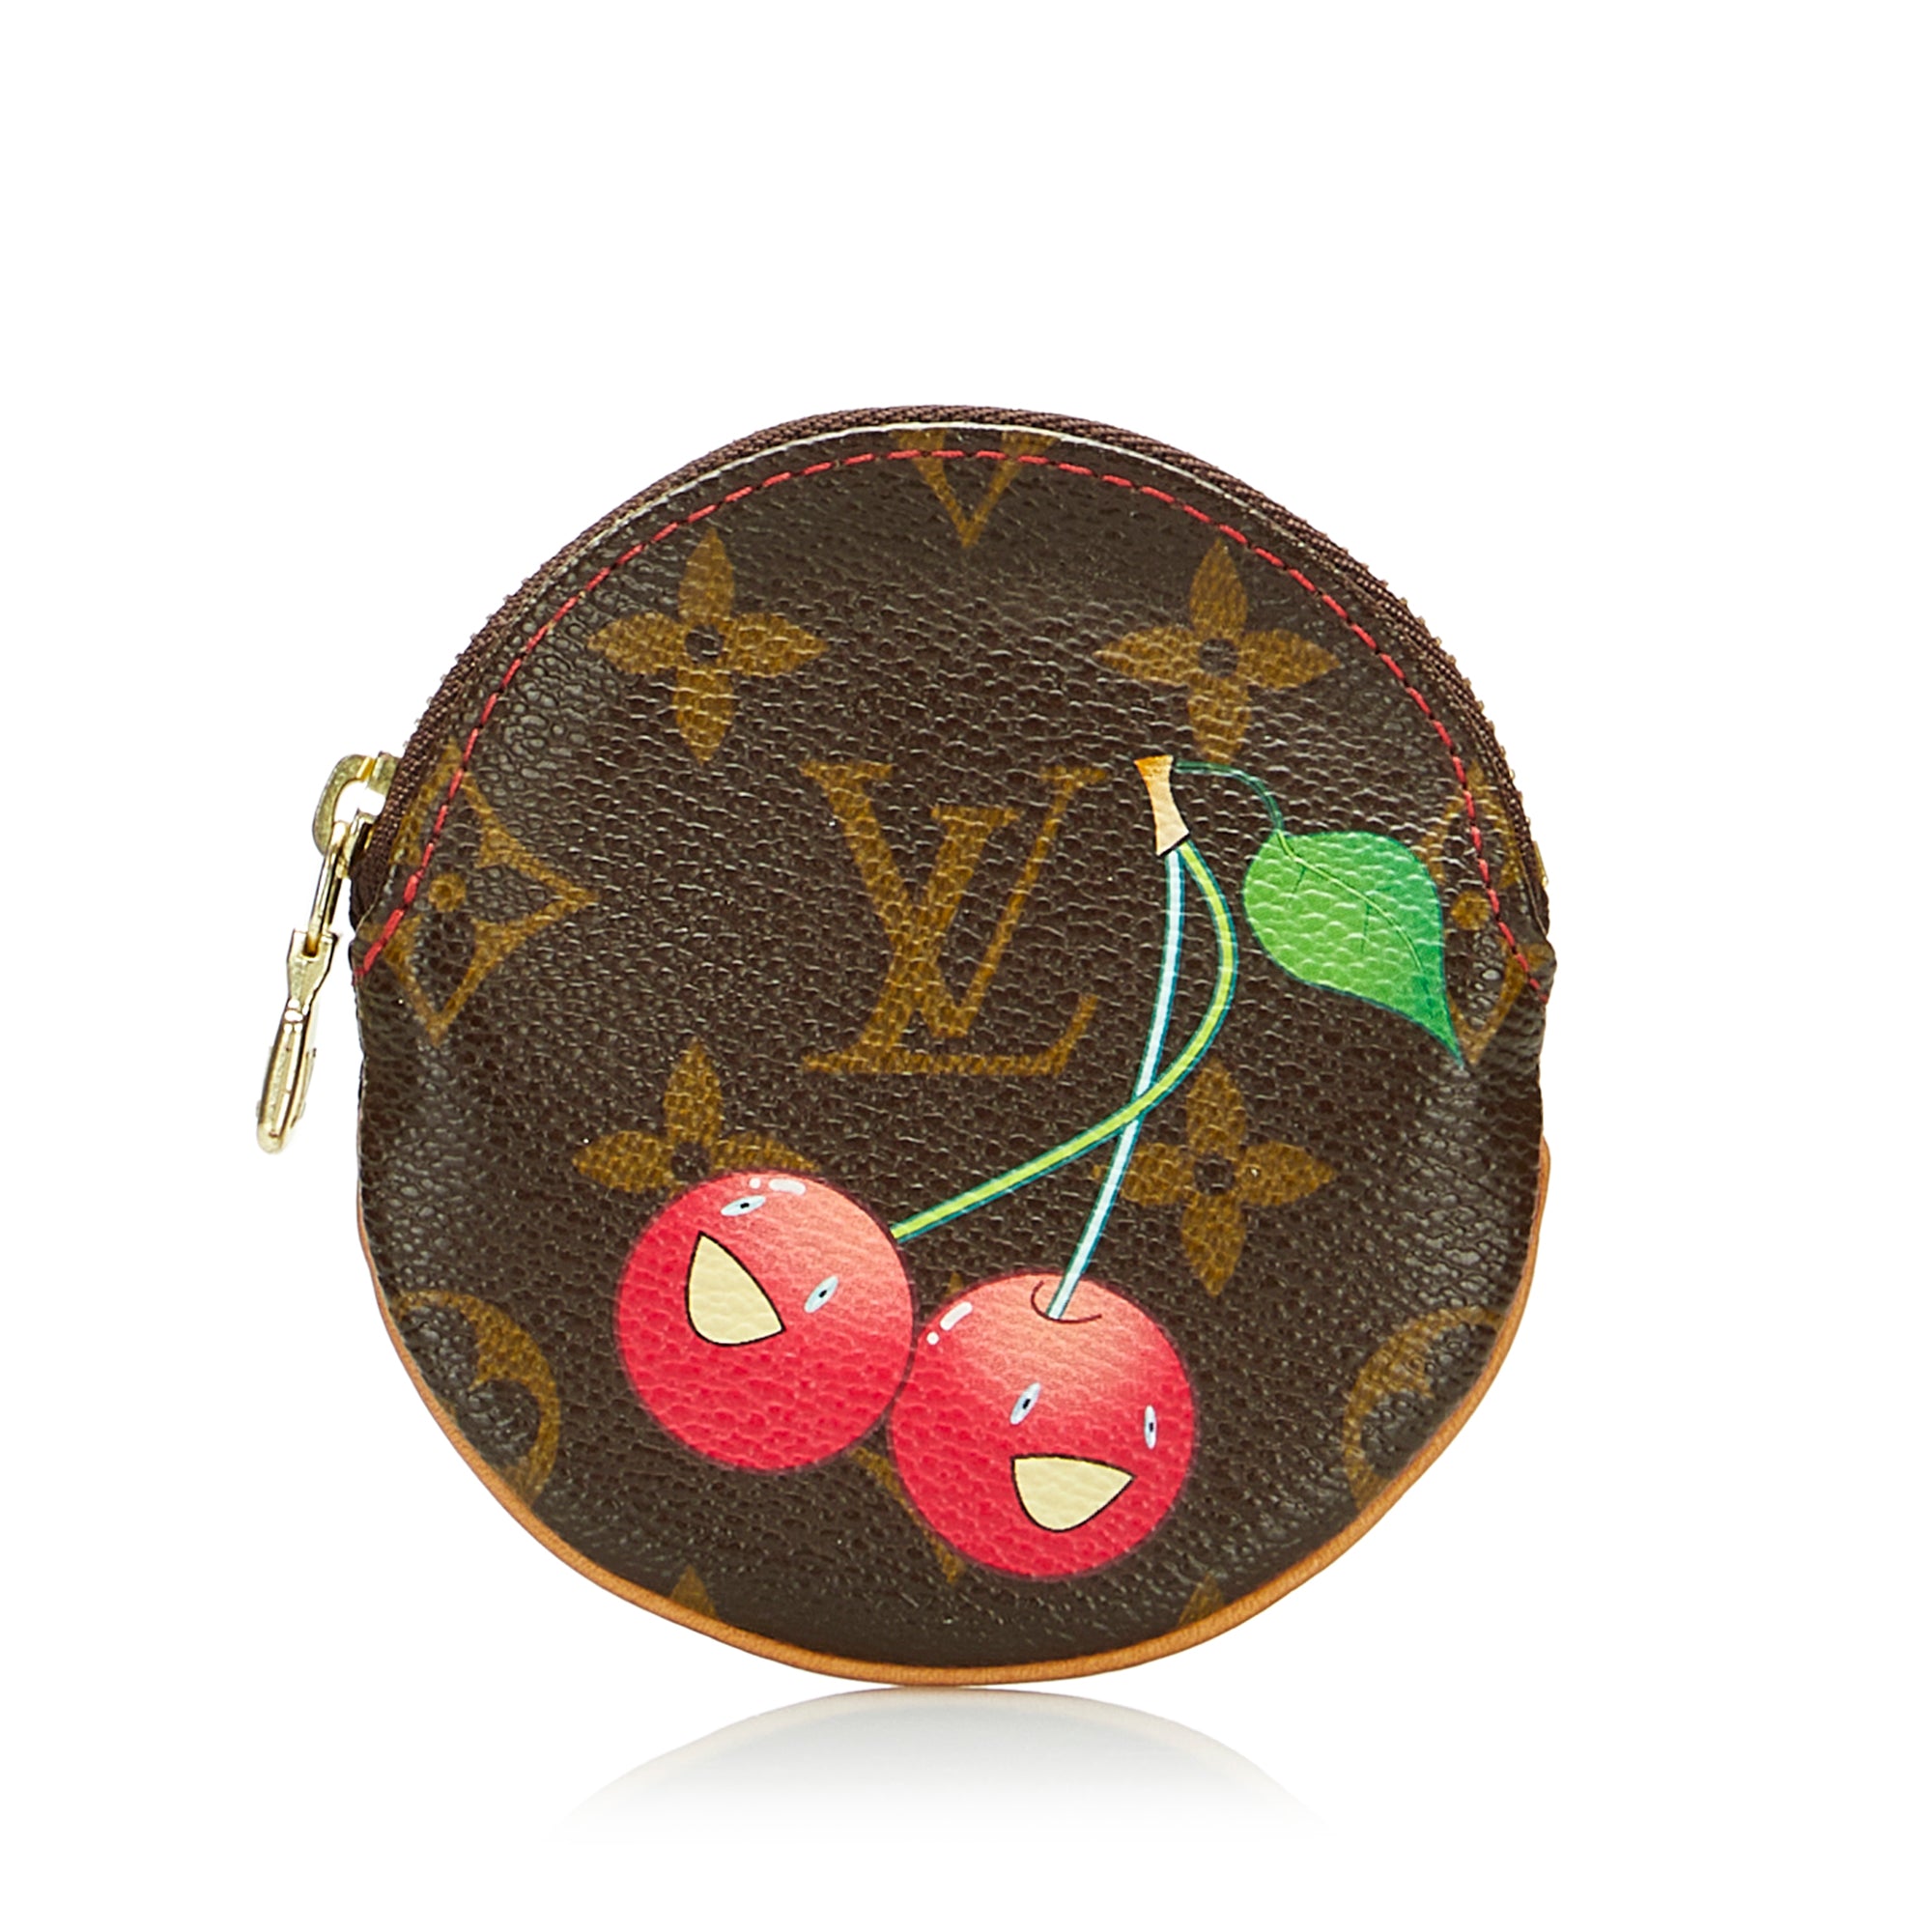 Louis Vuitton Empreinte Key Pouch Cherry